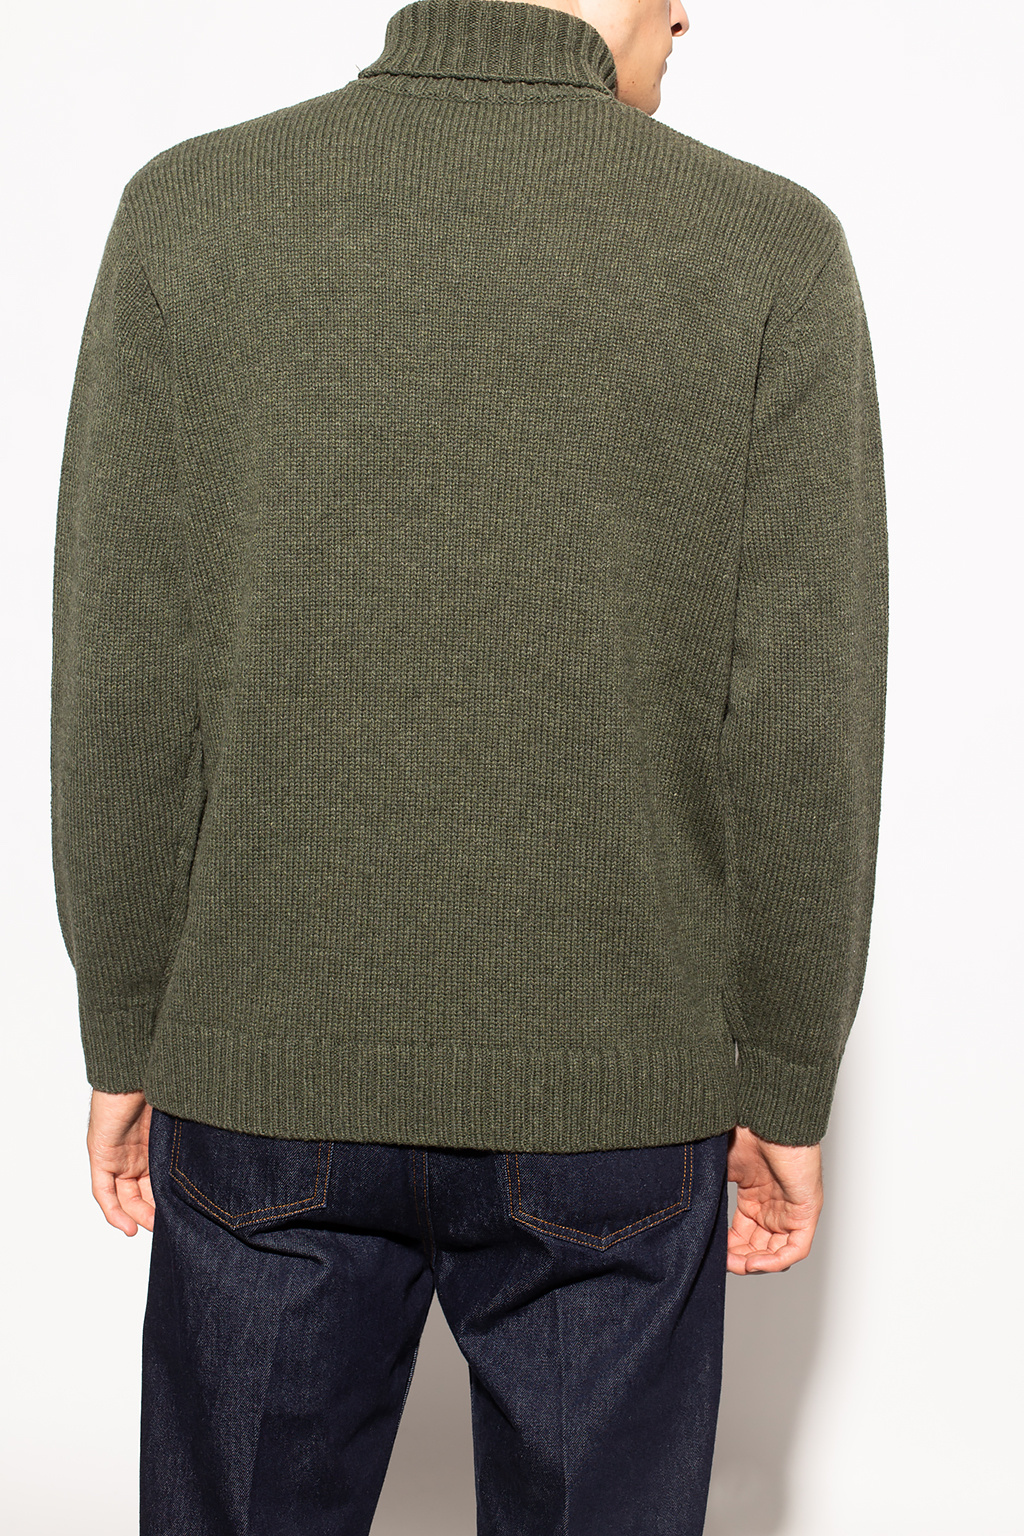 Undercover Wool turtleneck sweater